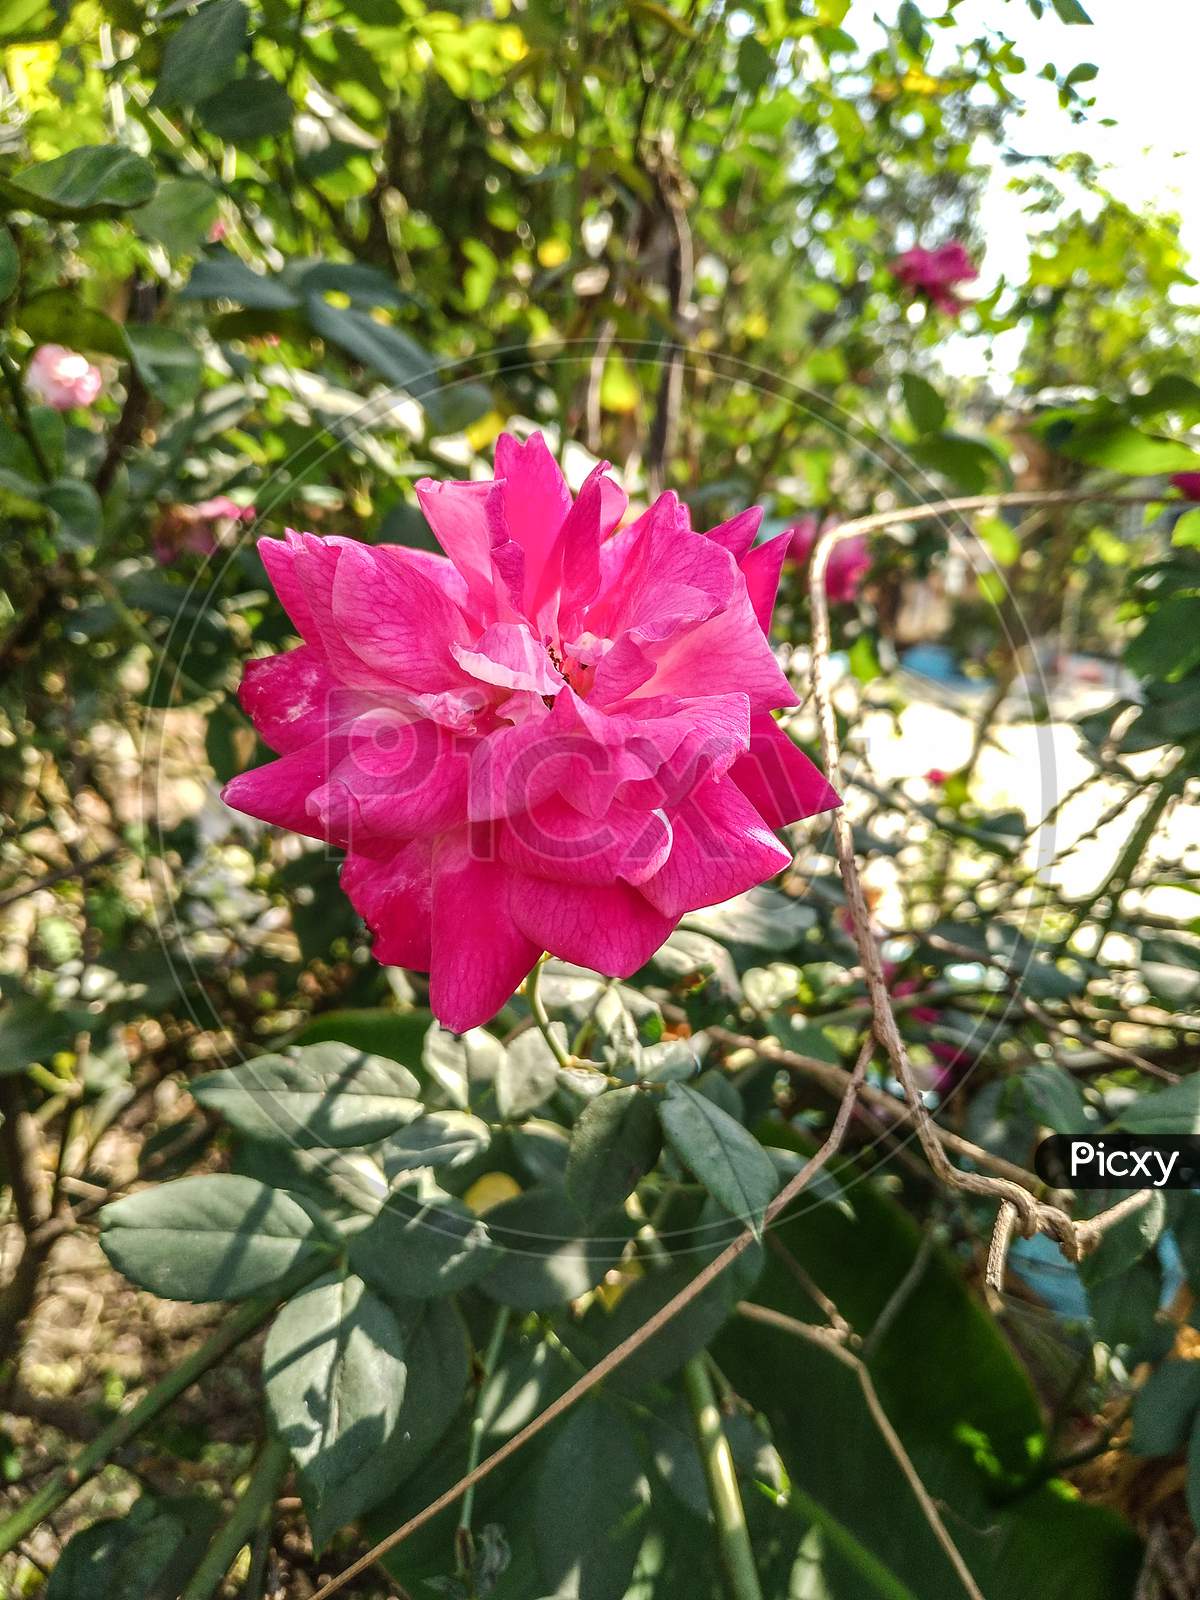 Pink rose flower outdoor image